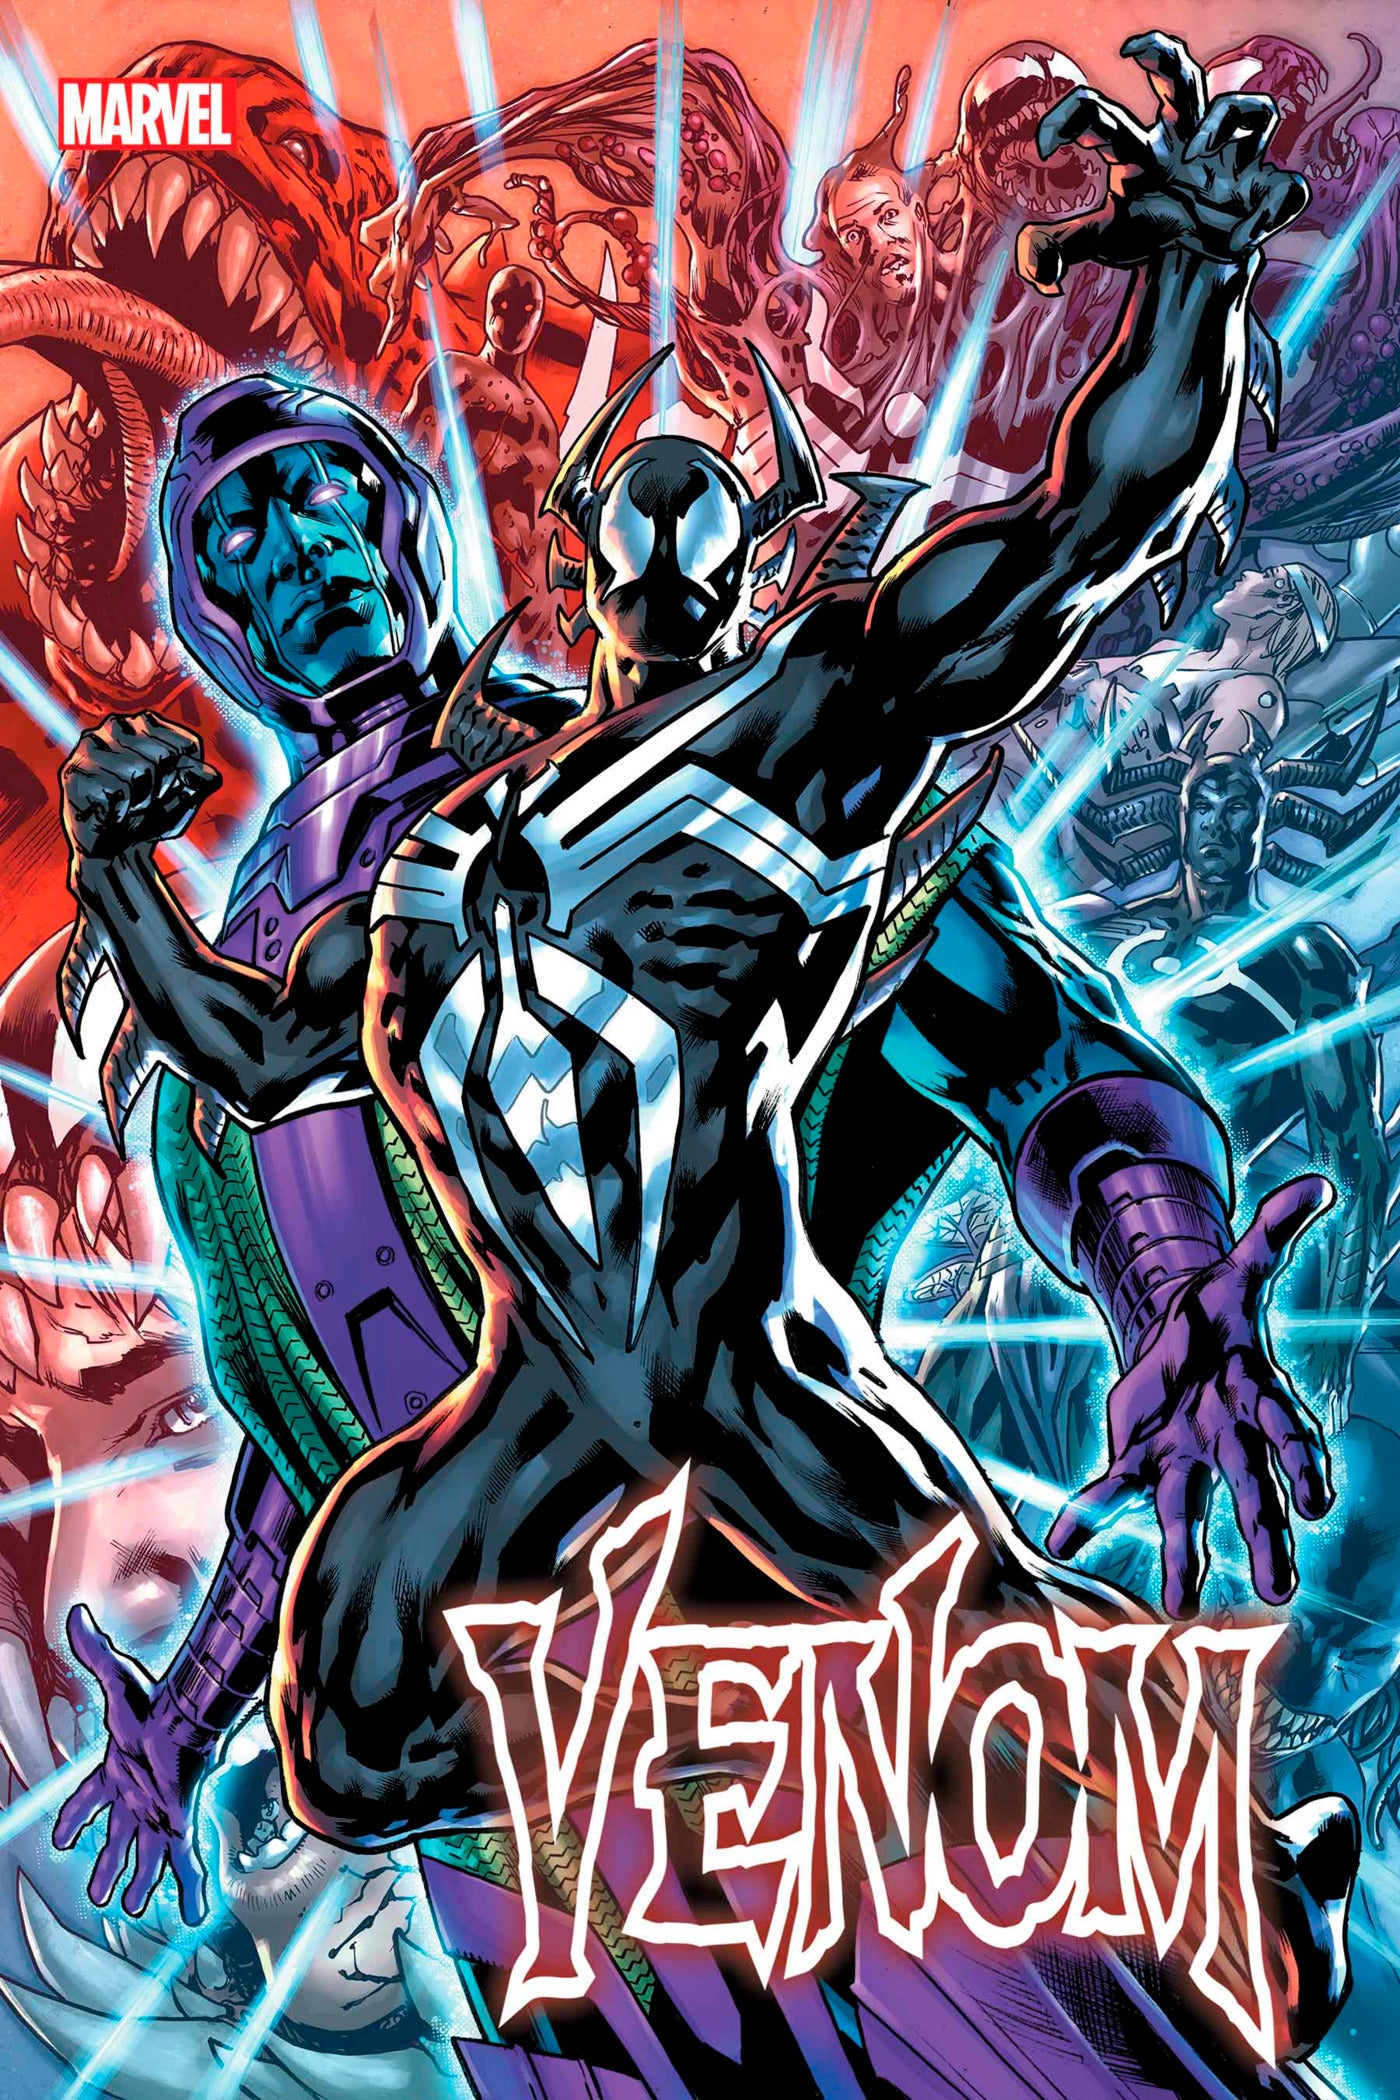 When does Marvel's Venom release? Marvel's Venom release window